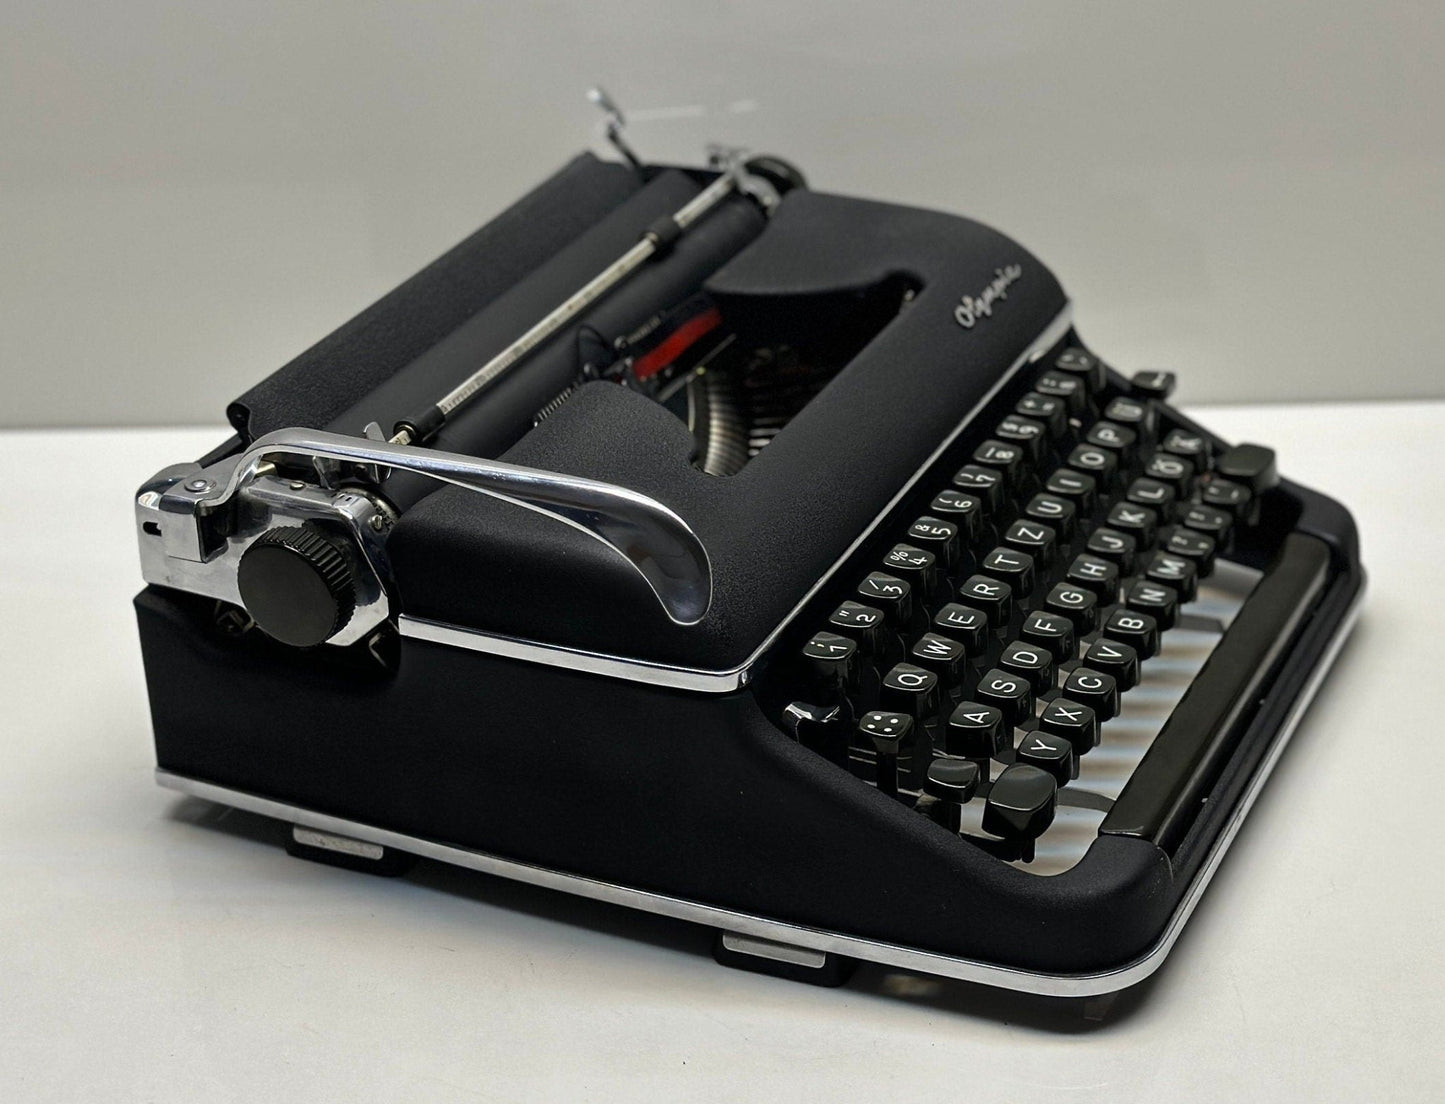 Olympia SM3 Black Typewriter - Premium Quality, Highly Preferred Model. Black Typewriter